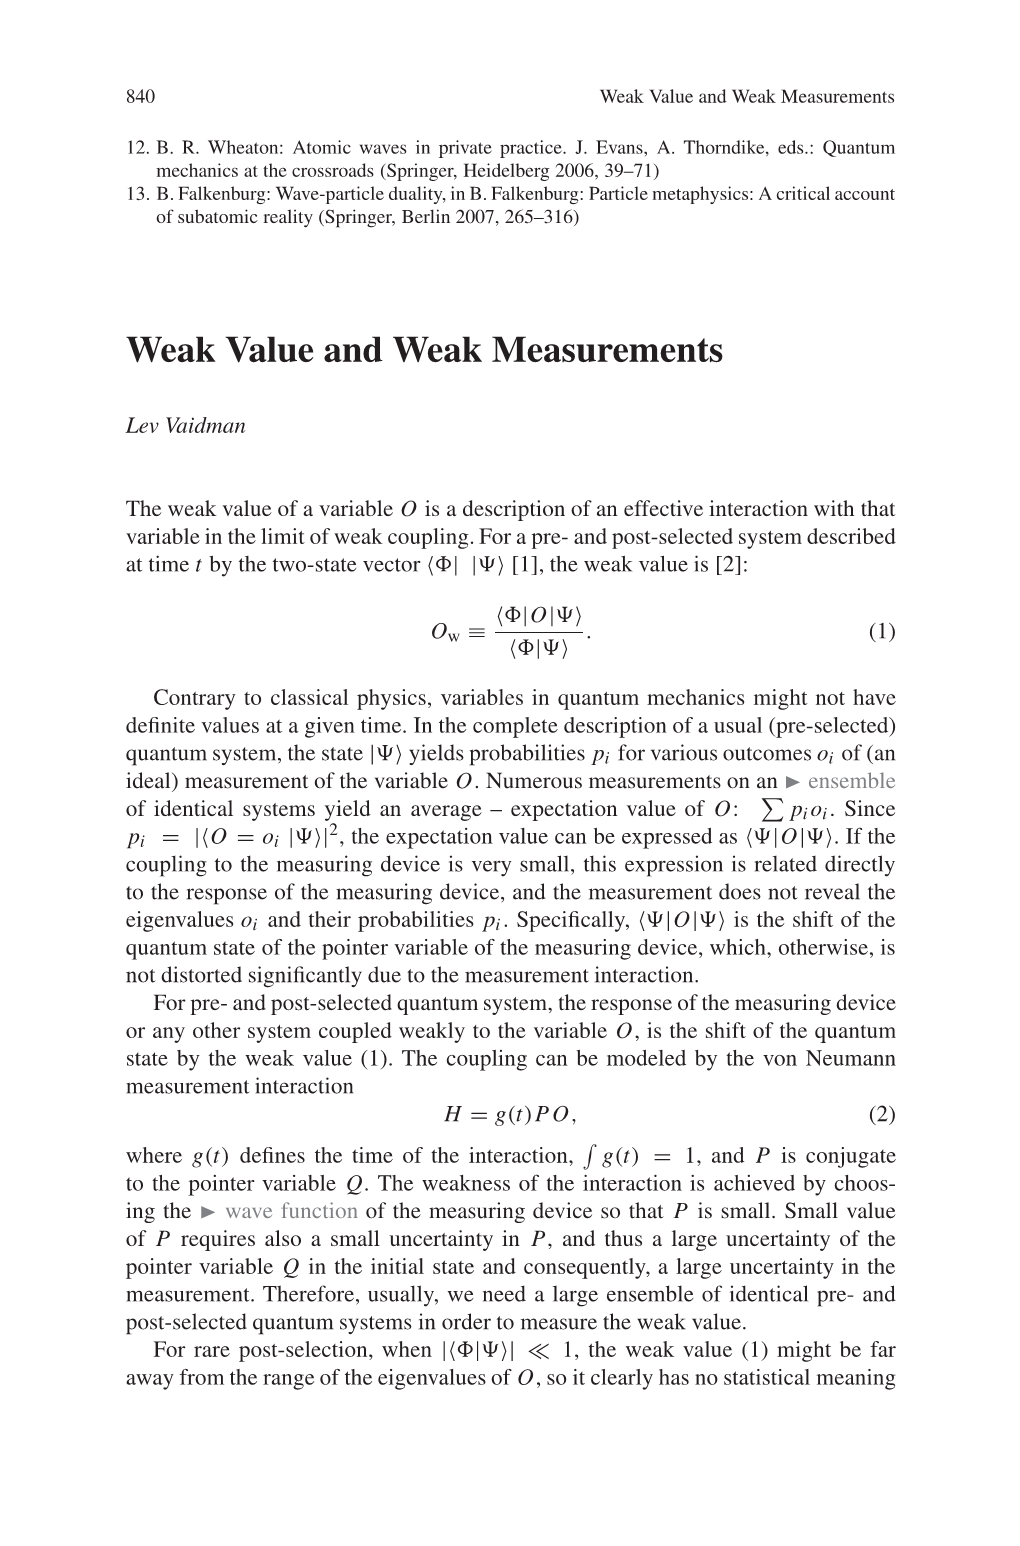 Weak Value and Weak Measurements